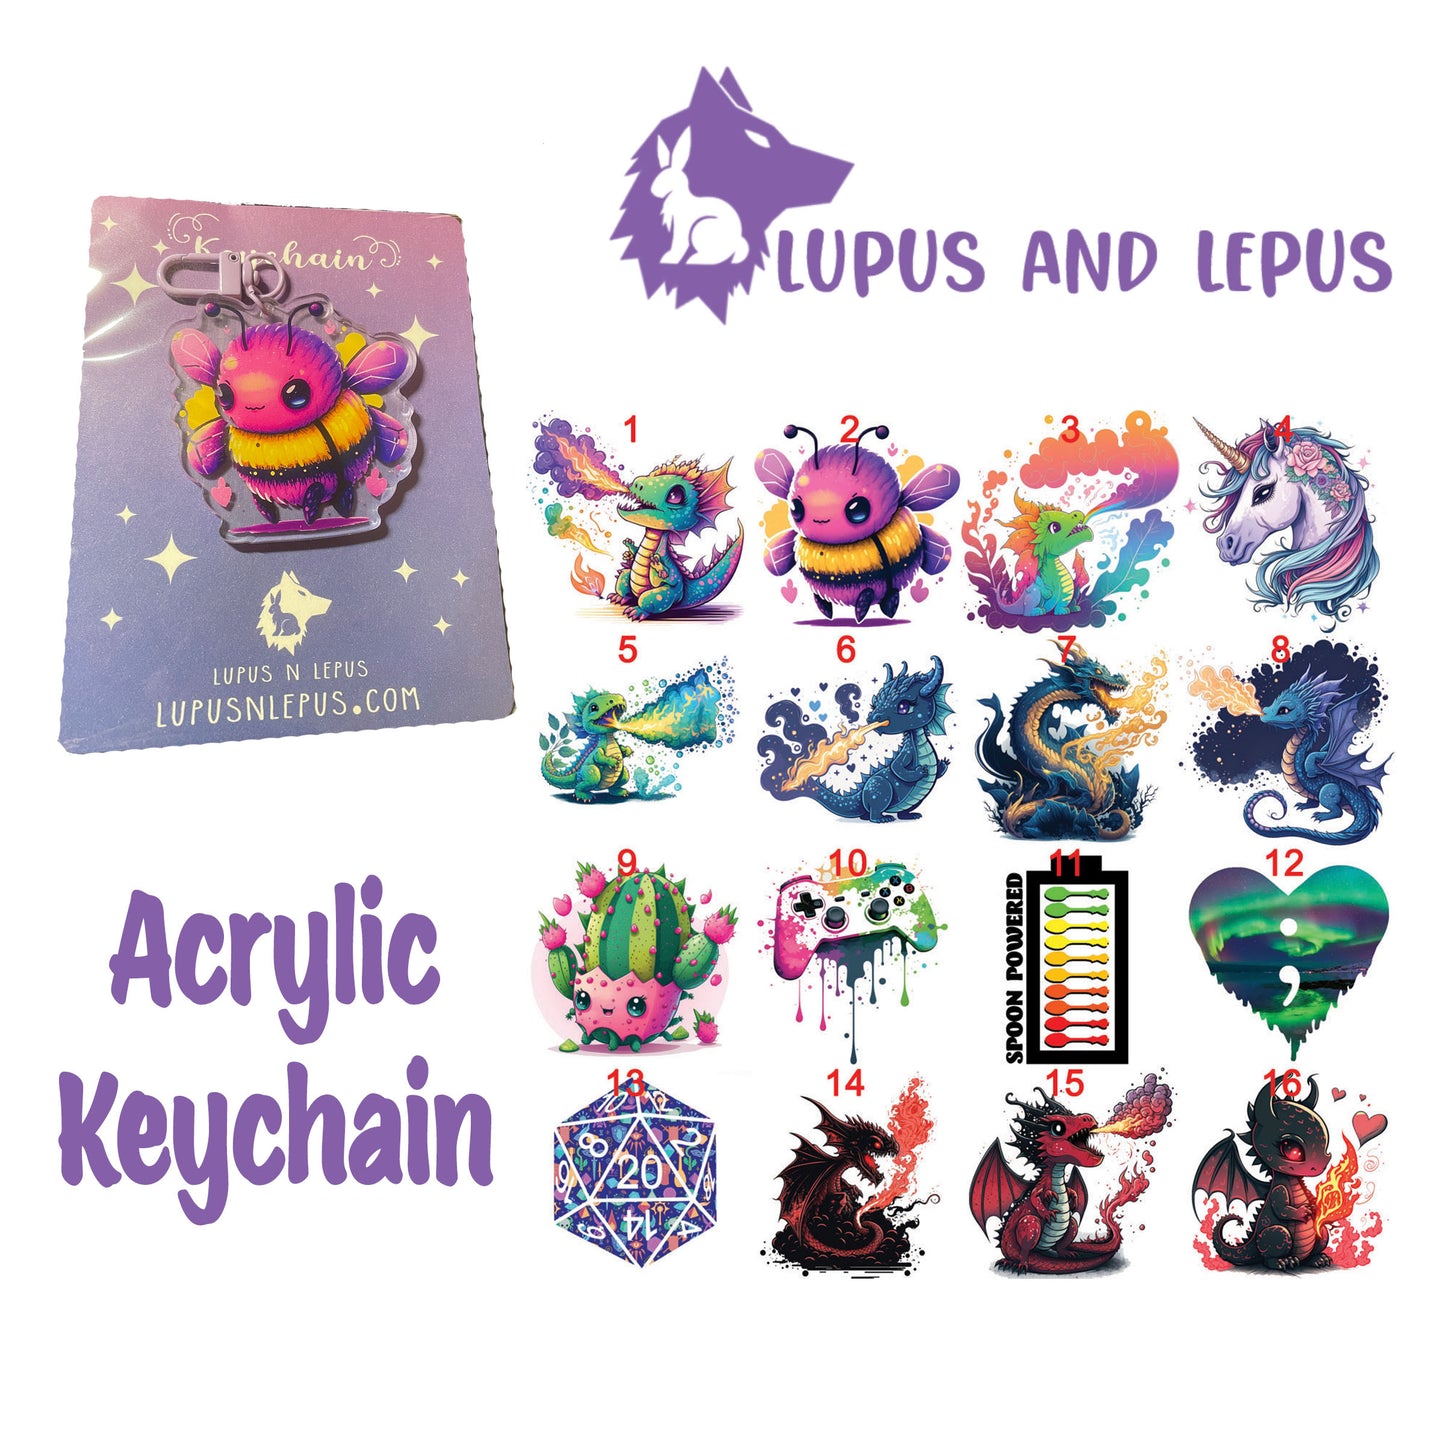 Acrylic Keychains 2 - My Art in the form of keychains, dragons, colorful, bunnies, faries, fairy, faery, magic, mythical, bear, giraffe, wearwolf, lizard, dinosaur,